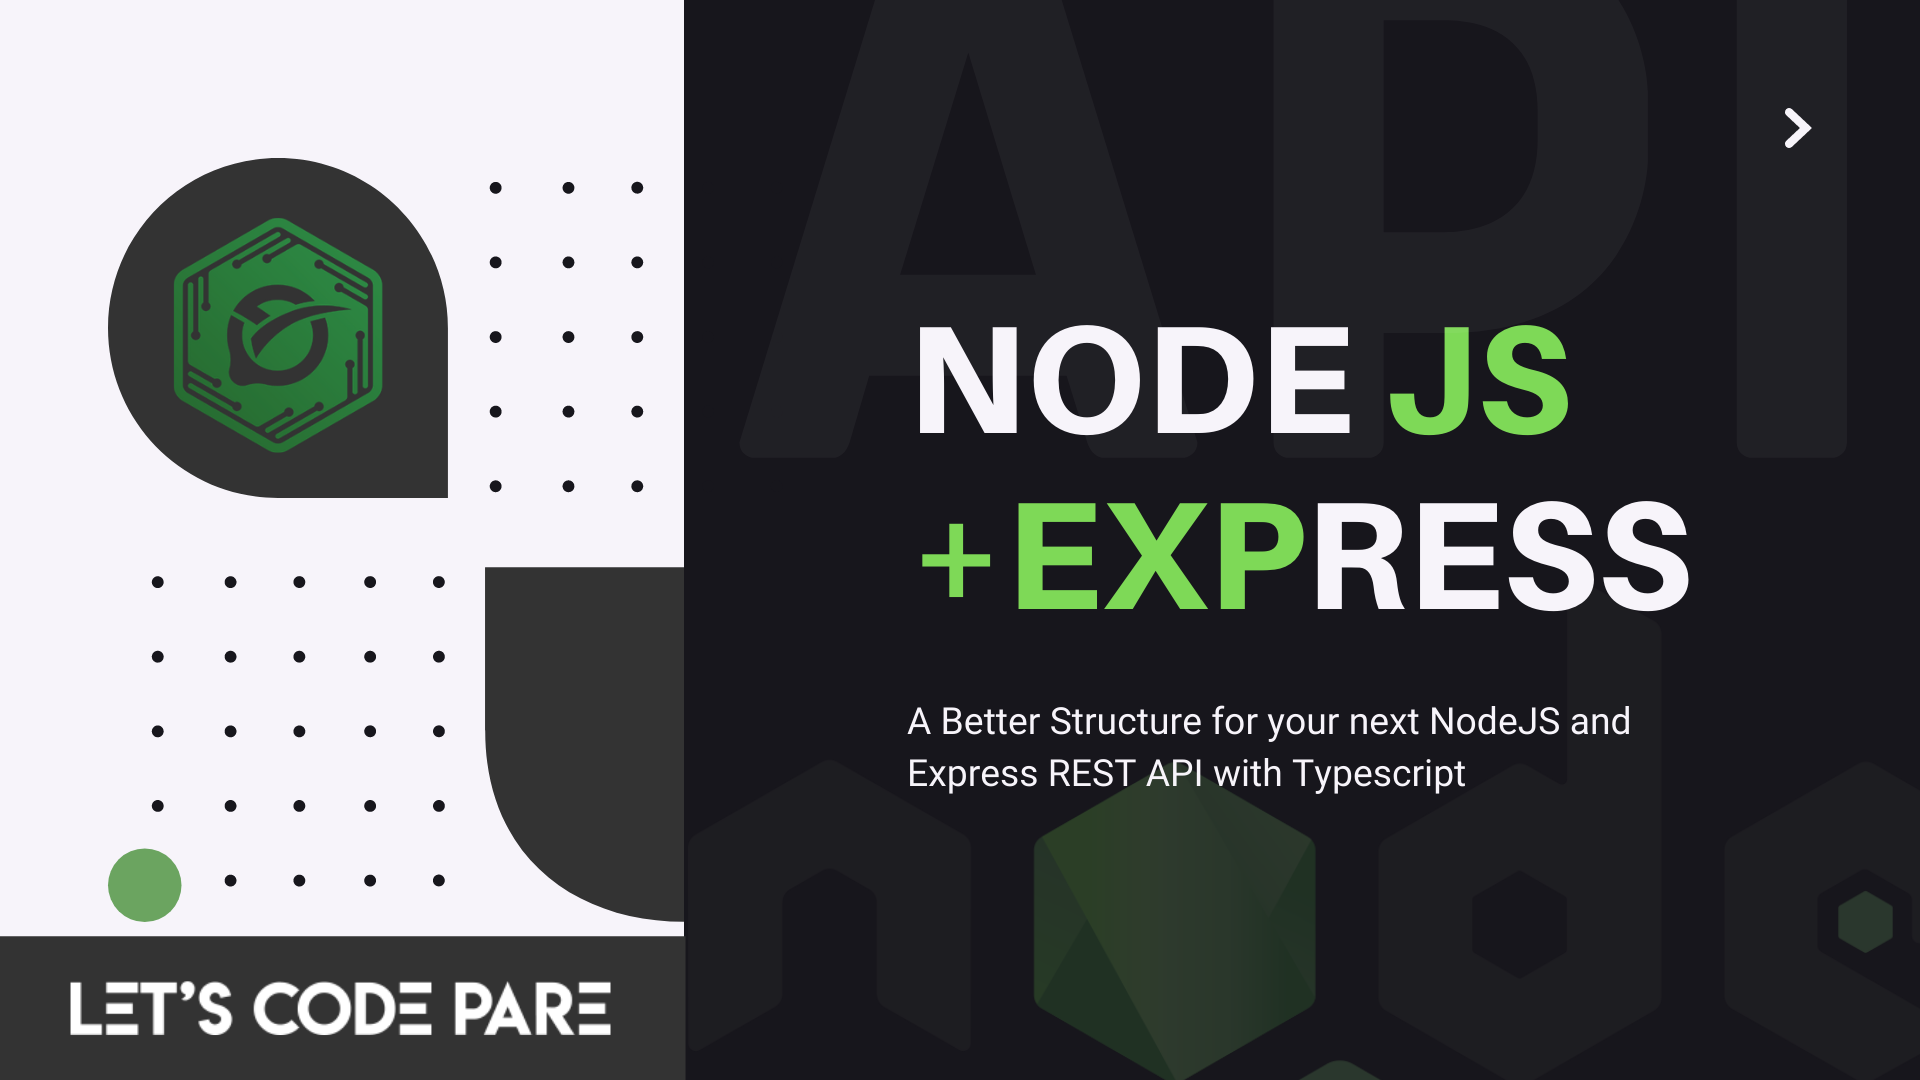 A Better Structure for NodeJS & Express REST API with Typescript